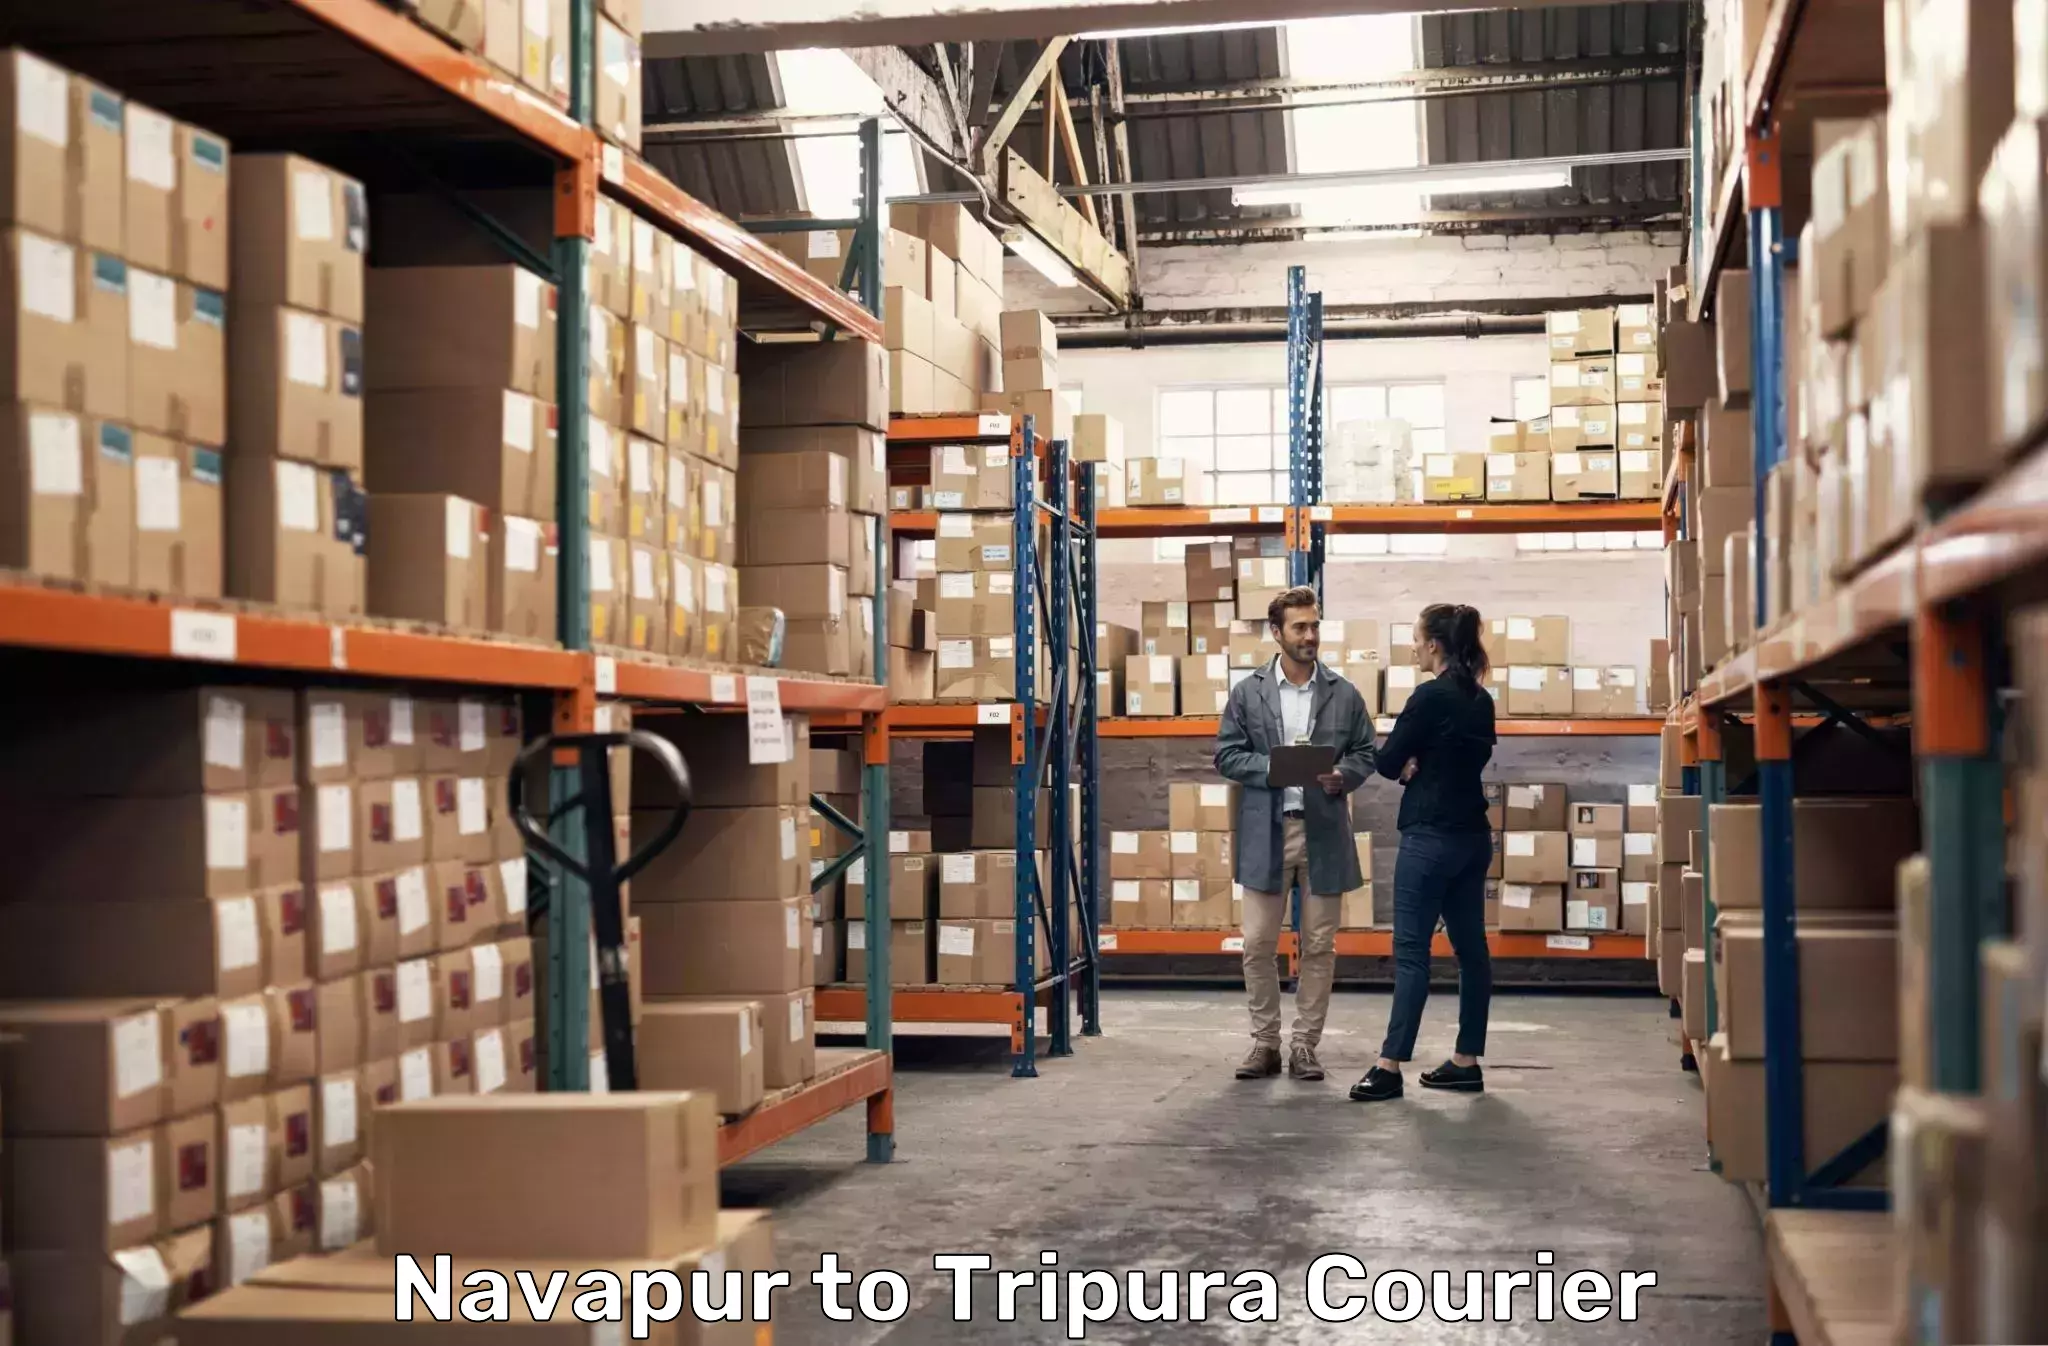 Courier insurance Navapur to Udaipur Tripura